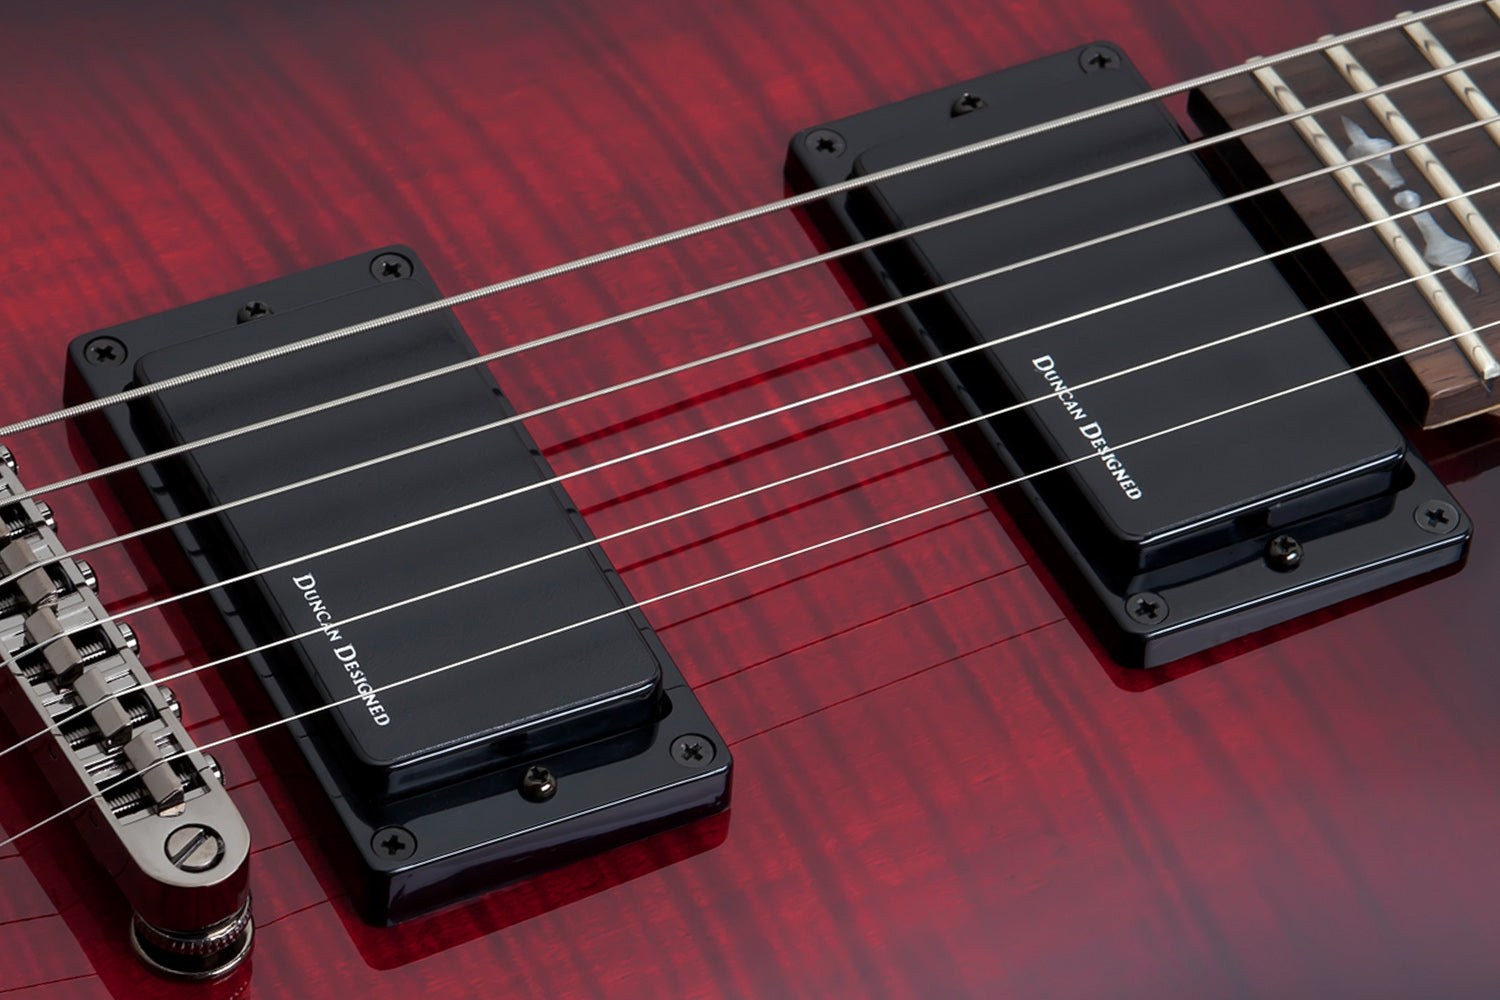 Schecter DEMON-6-CRB Crimson Burst Guitar with Duncan Designed HB 105 3245-SHC